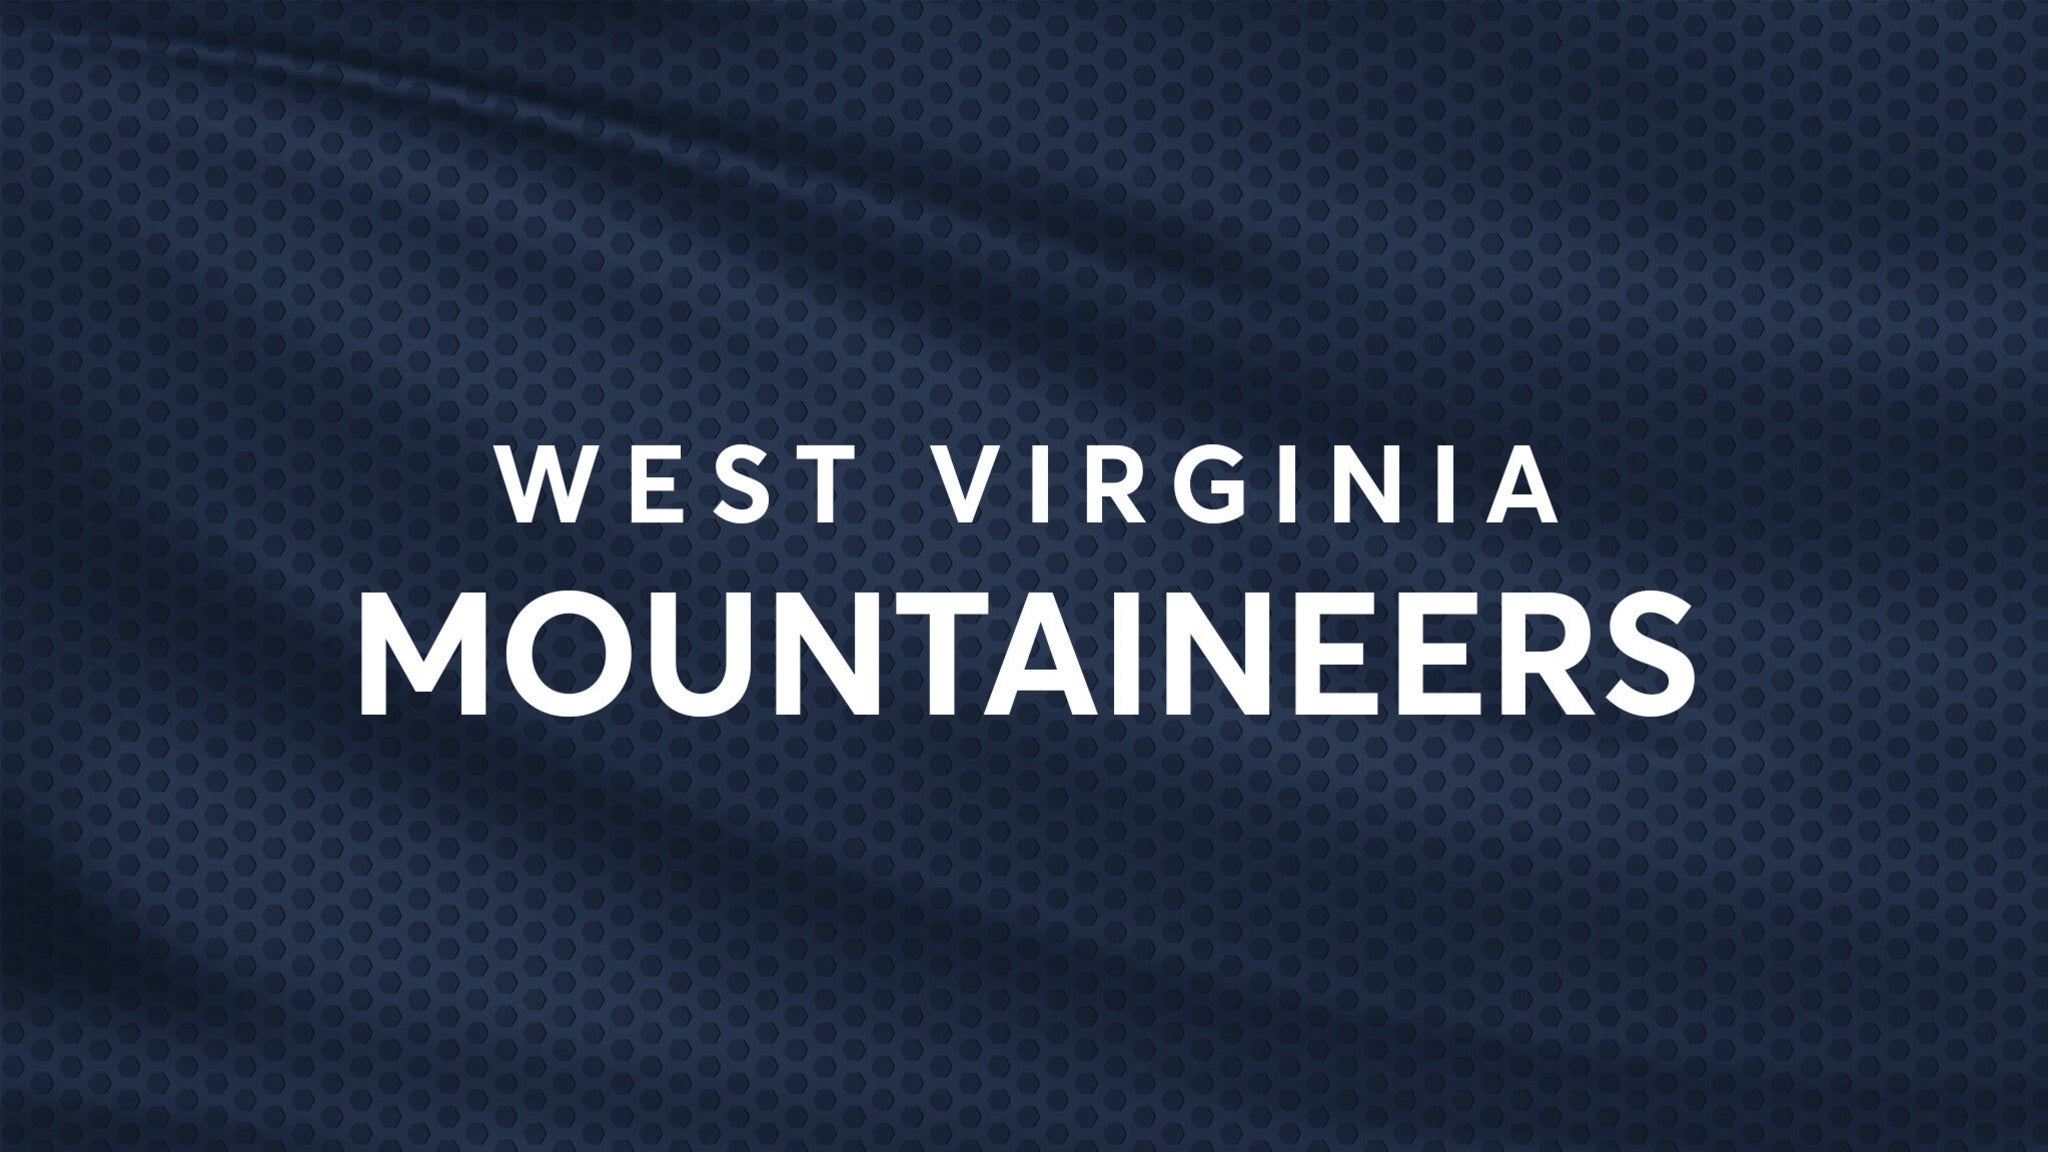 West Virginia Mountaineers Football at Mountaineer Field